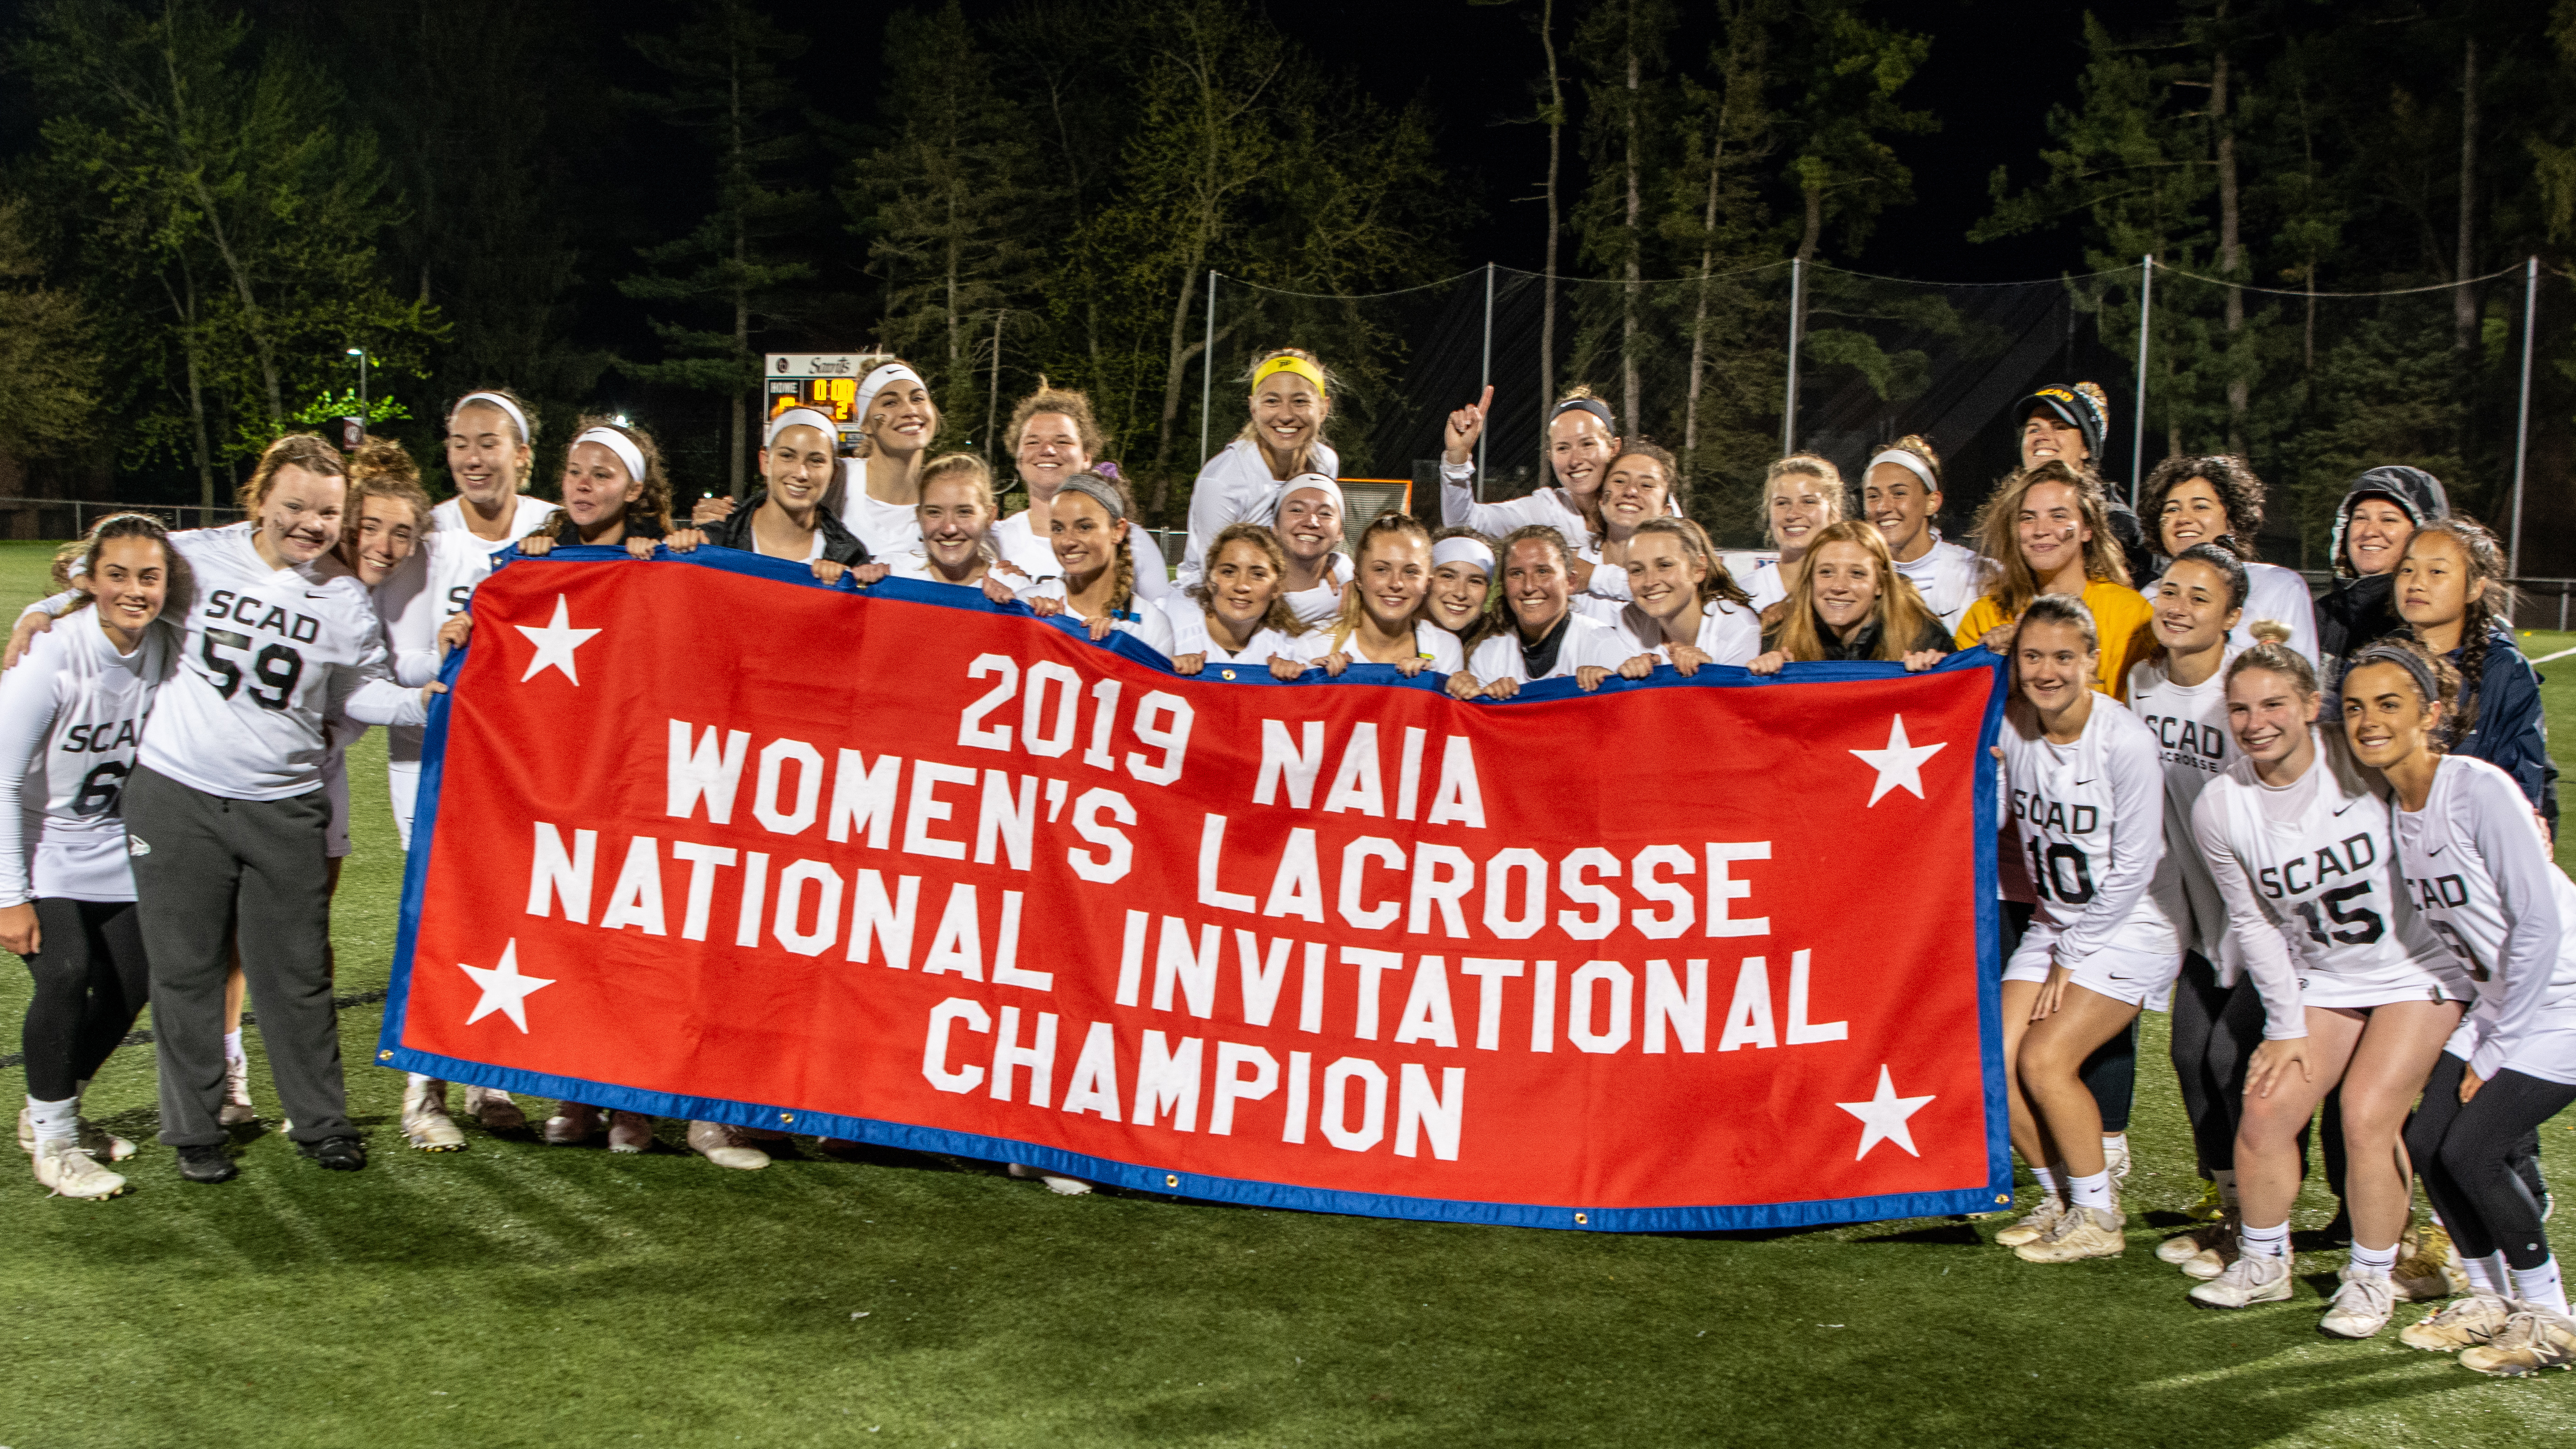 2019 NAIA Women's Lacrosse Invitational Championship